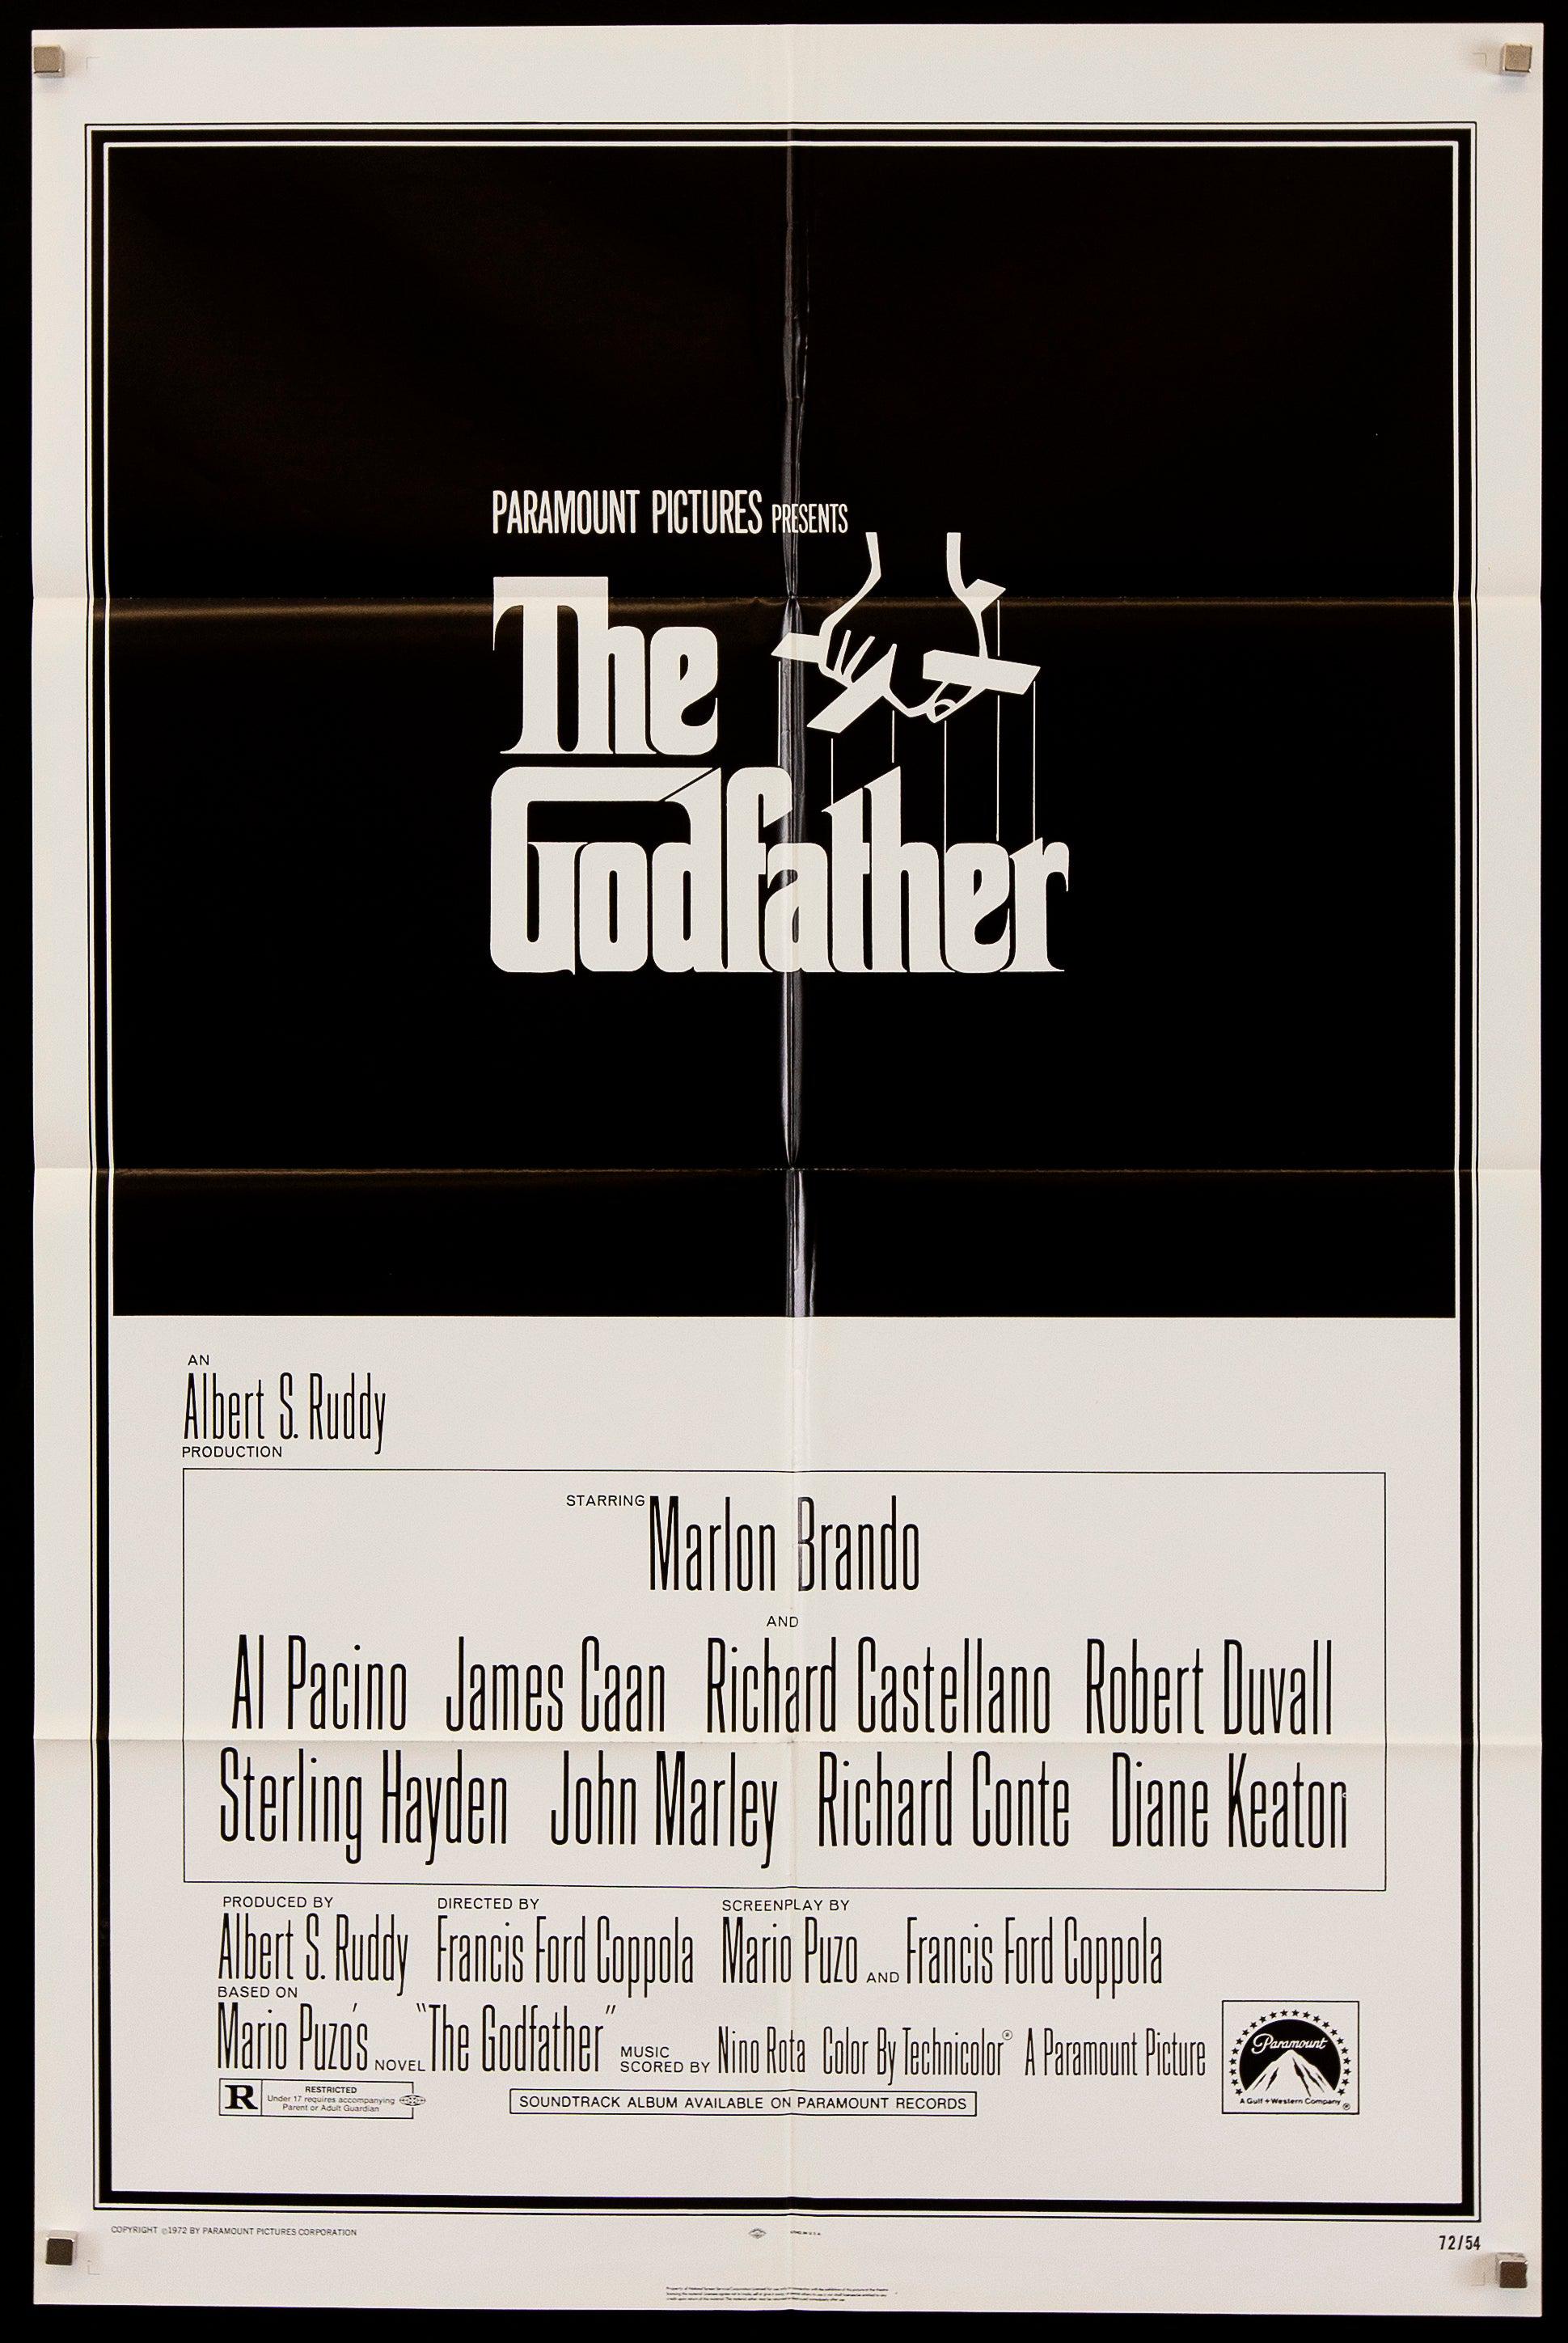 godfather original poster